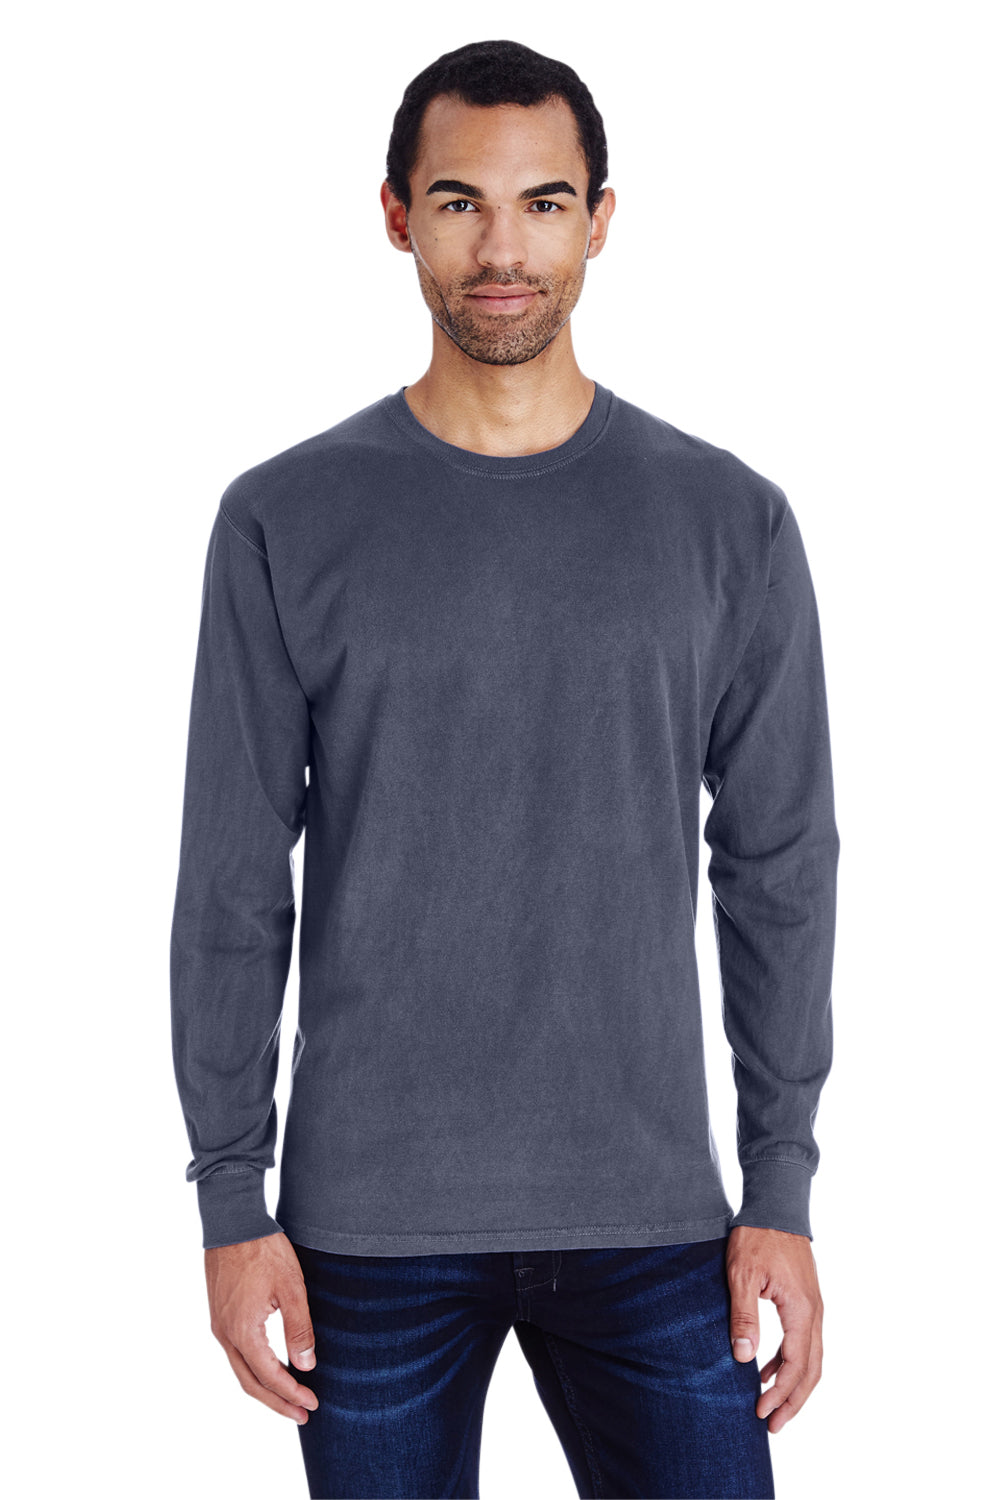 ComfortWash By Hanes GDH200 Mens Long Sleeve Crewneck T-Shirt Slate Blue Front